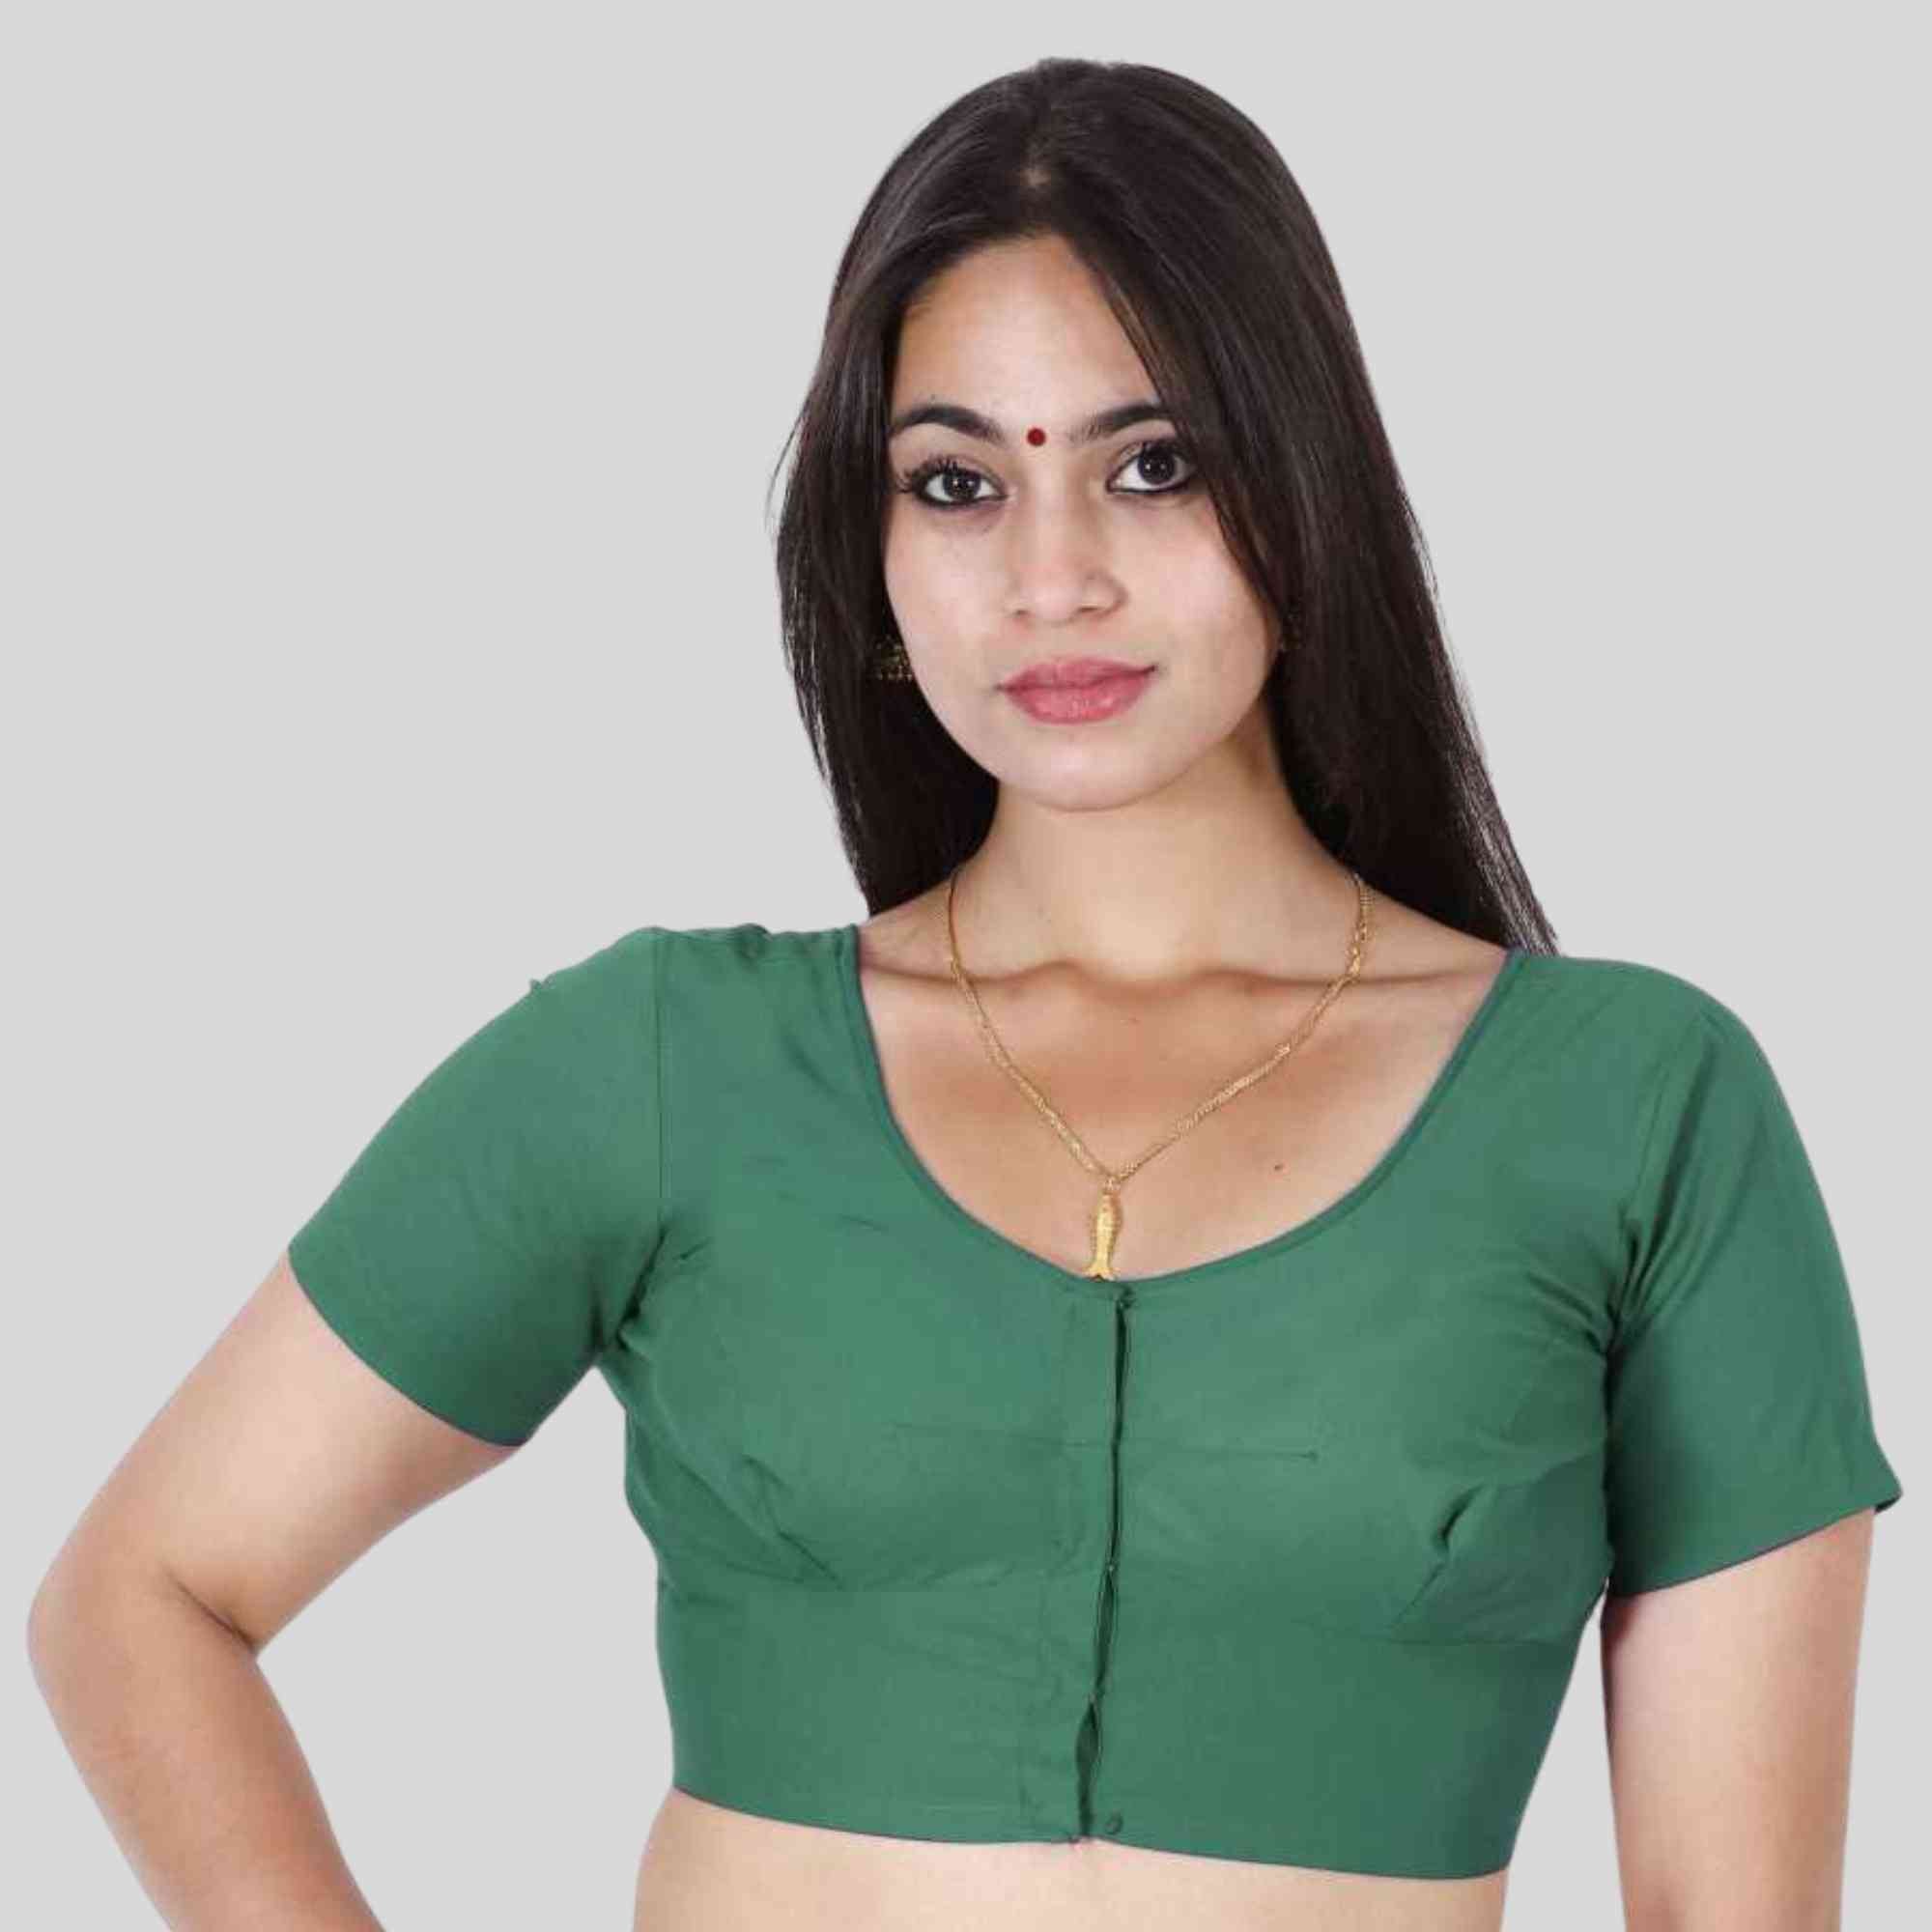 2 by 2 Dark Green blouse